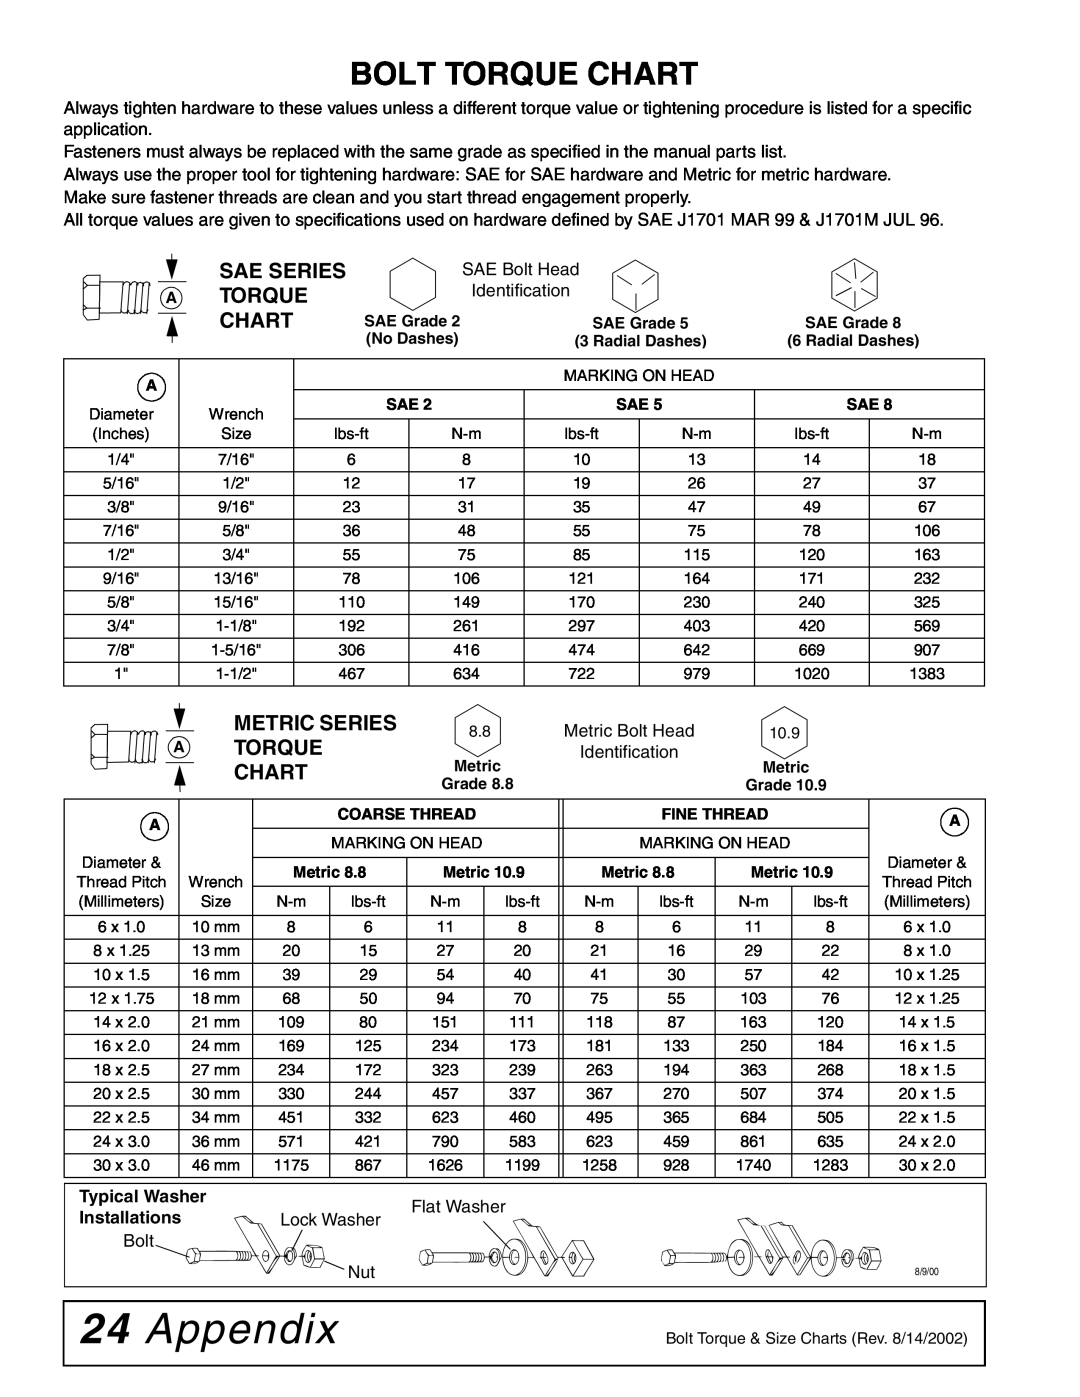 Woods Equipment RBC60 LRC60 manual Appendix, Bolt Torque Chart, Sae Series A Torque Chart, Metric Series Torque Chart 